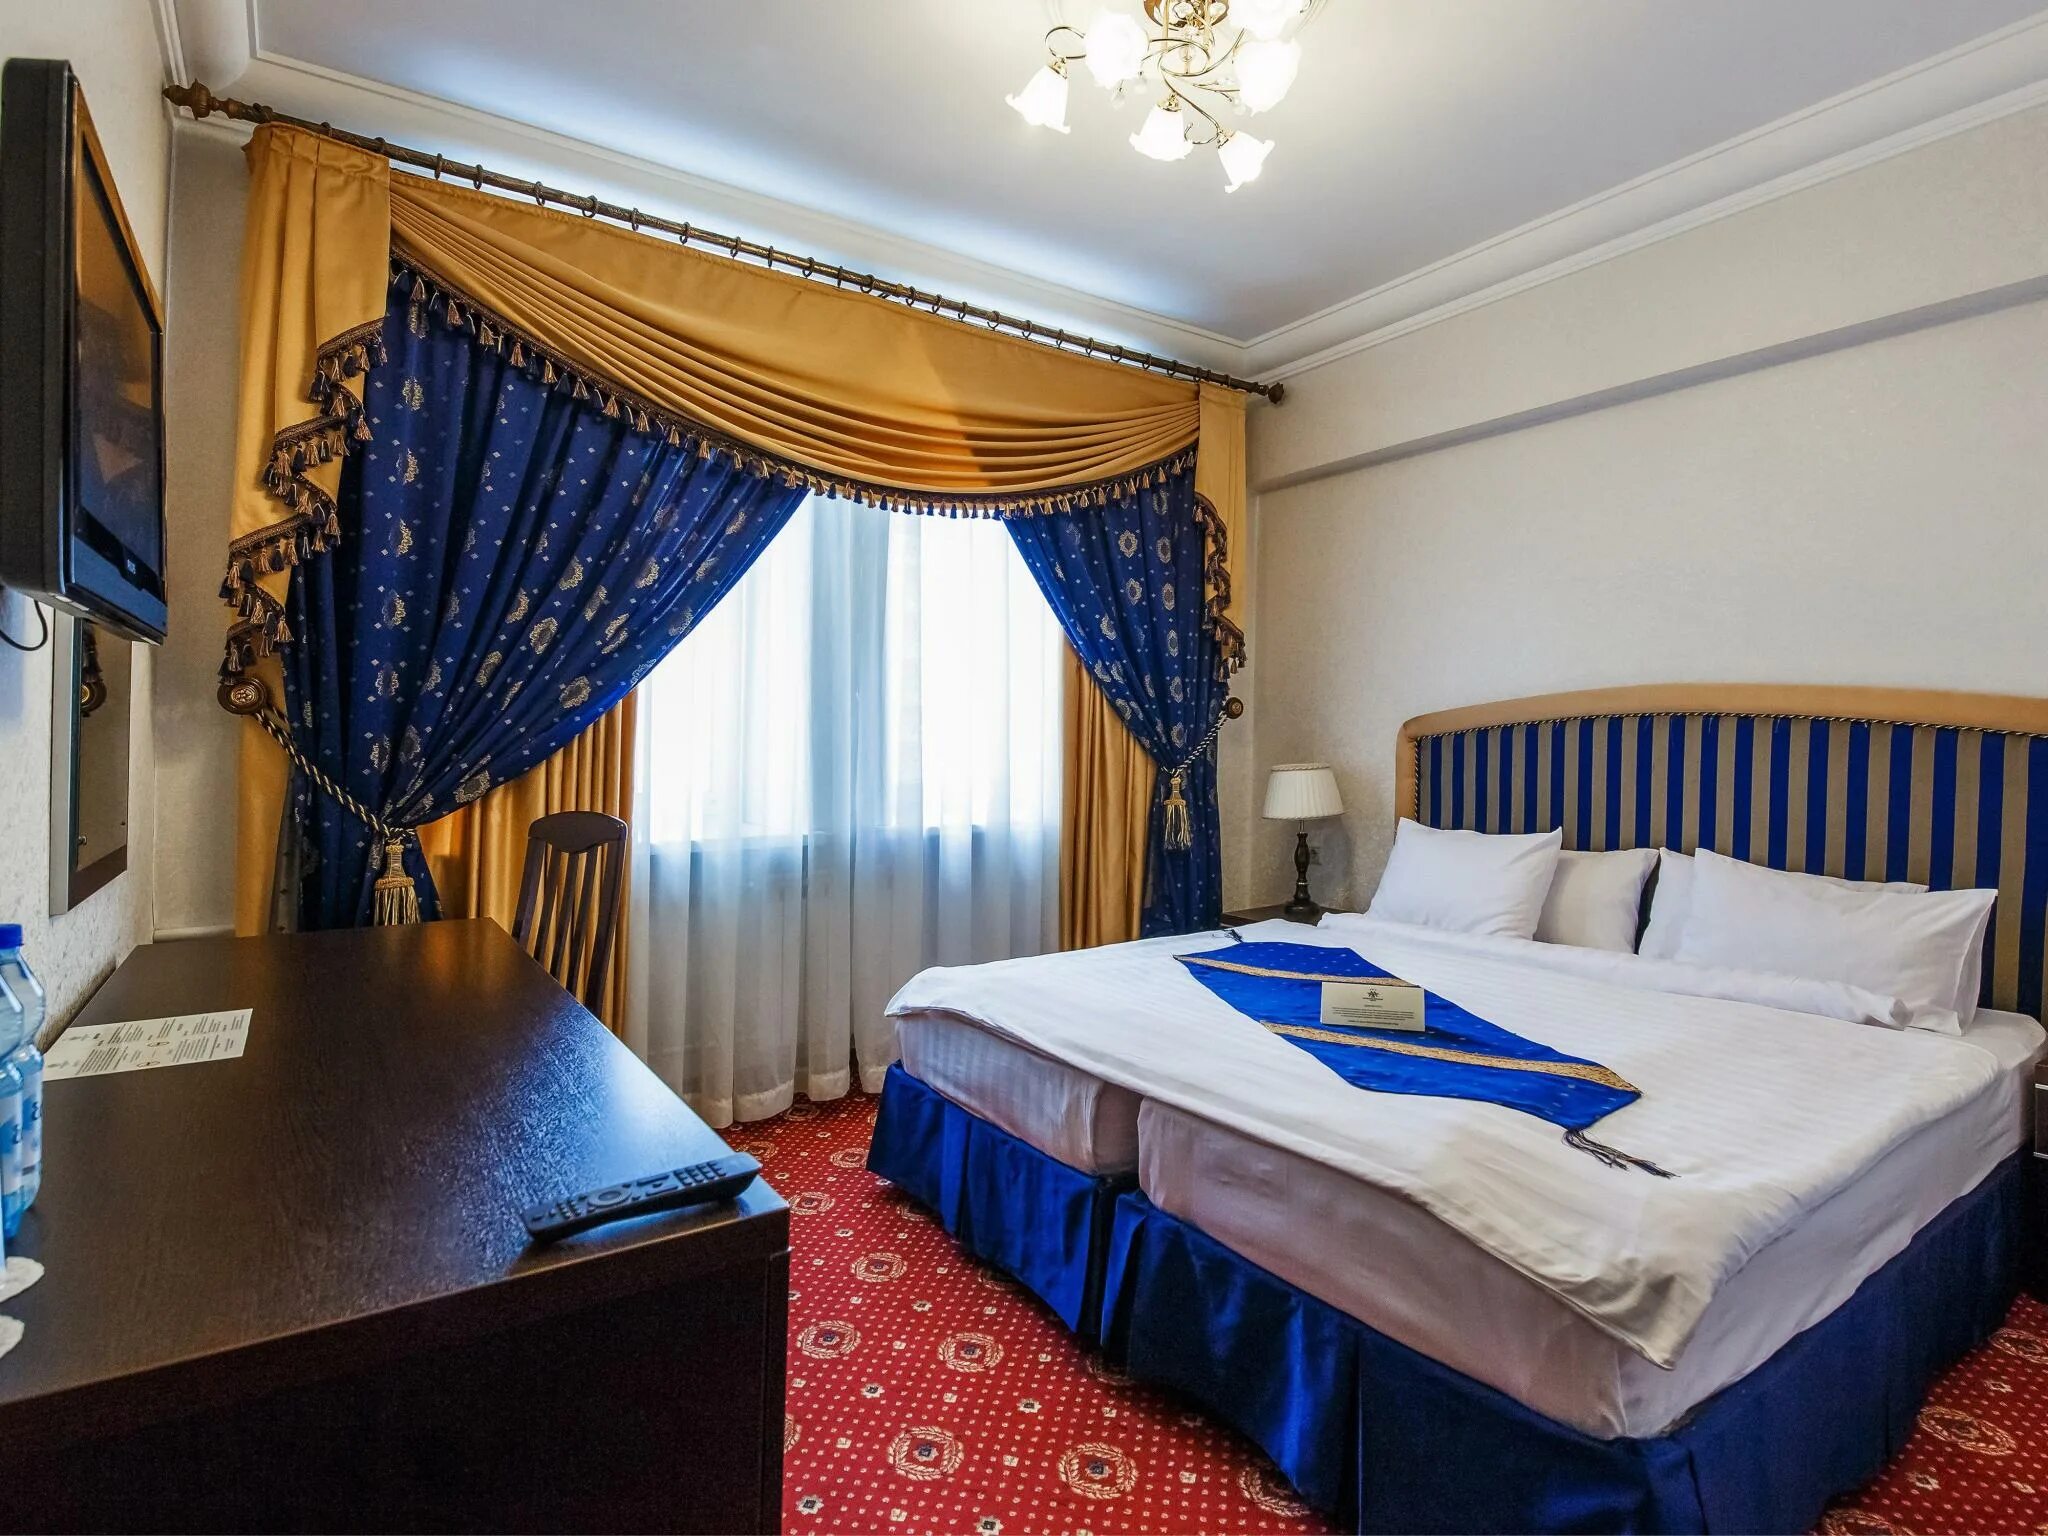 Гостиница москва цены за сутки на номера